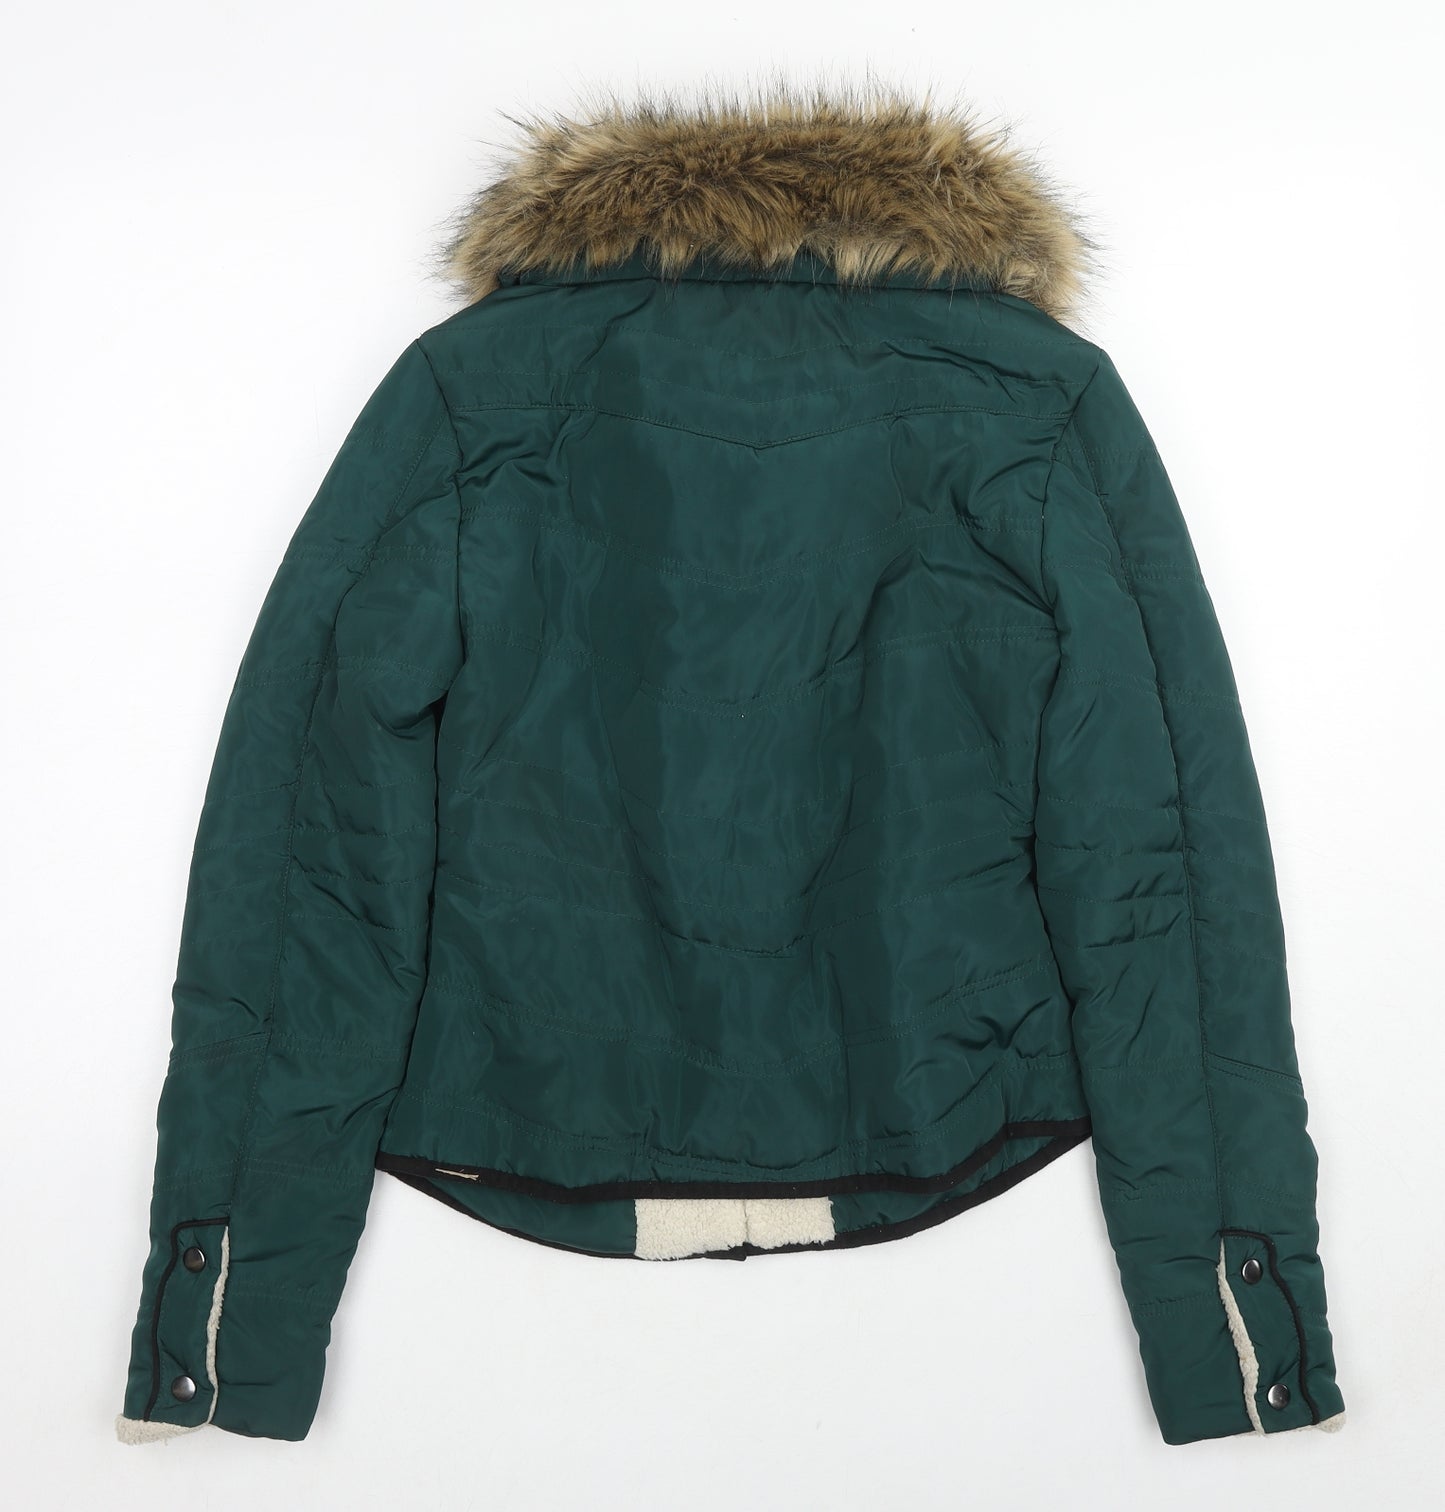 Urban Bliss Womens Green Jacket Size 8 Zip